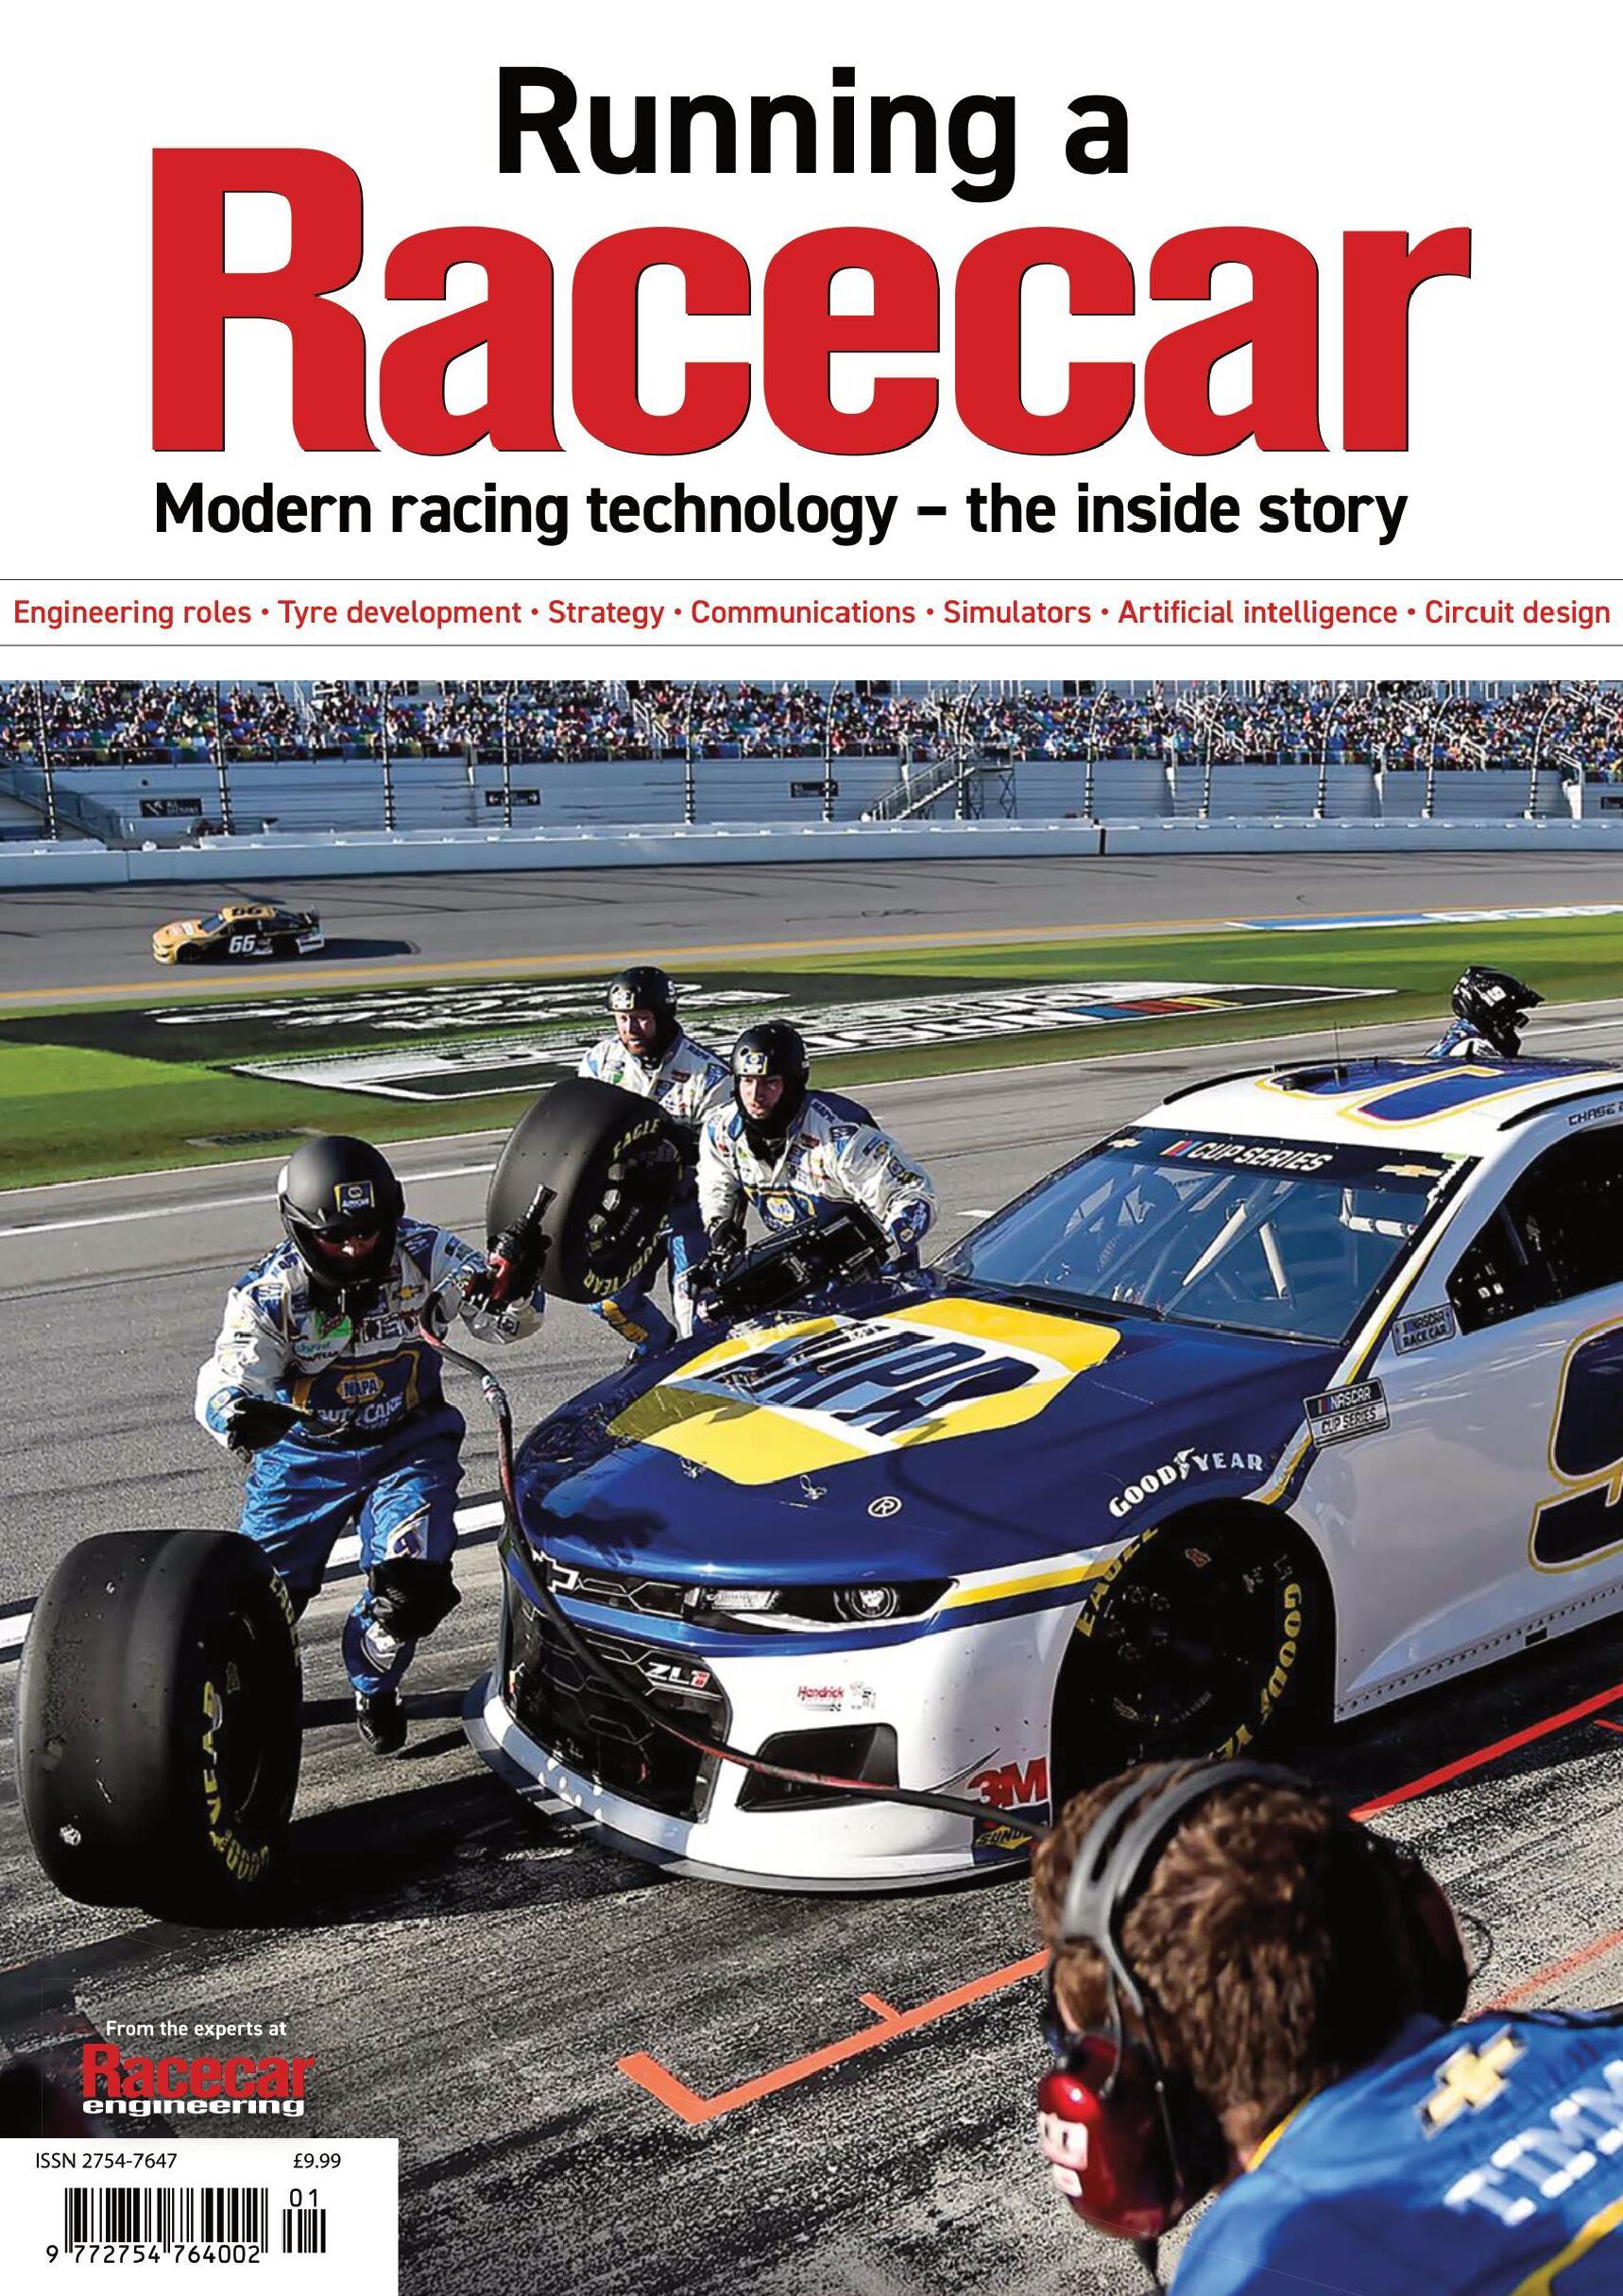 Журнал Racecar Engineering: Running a Racecar